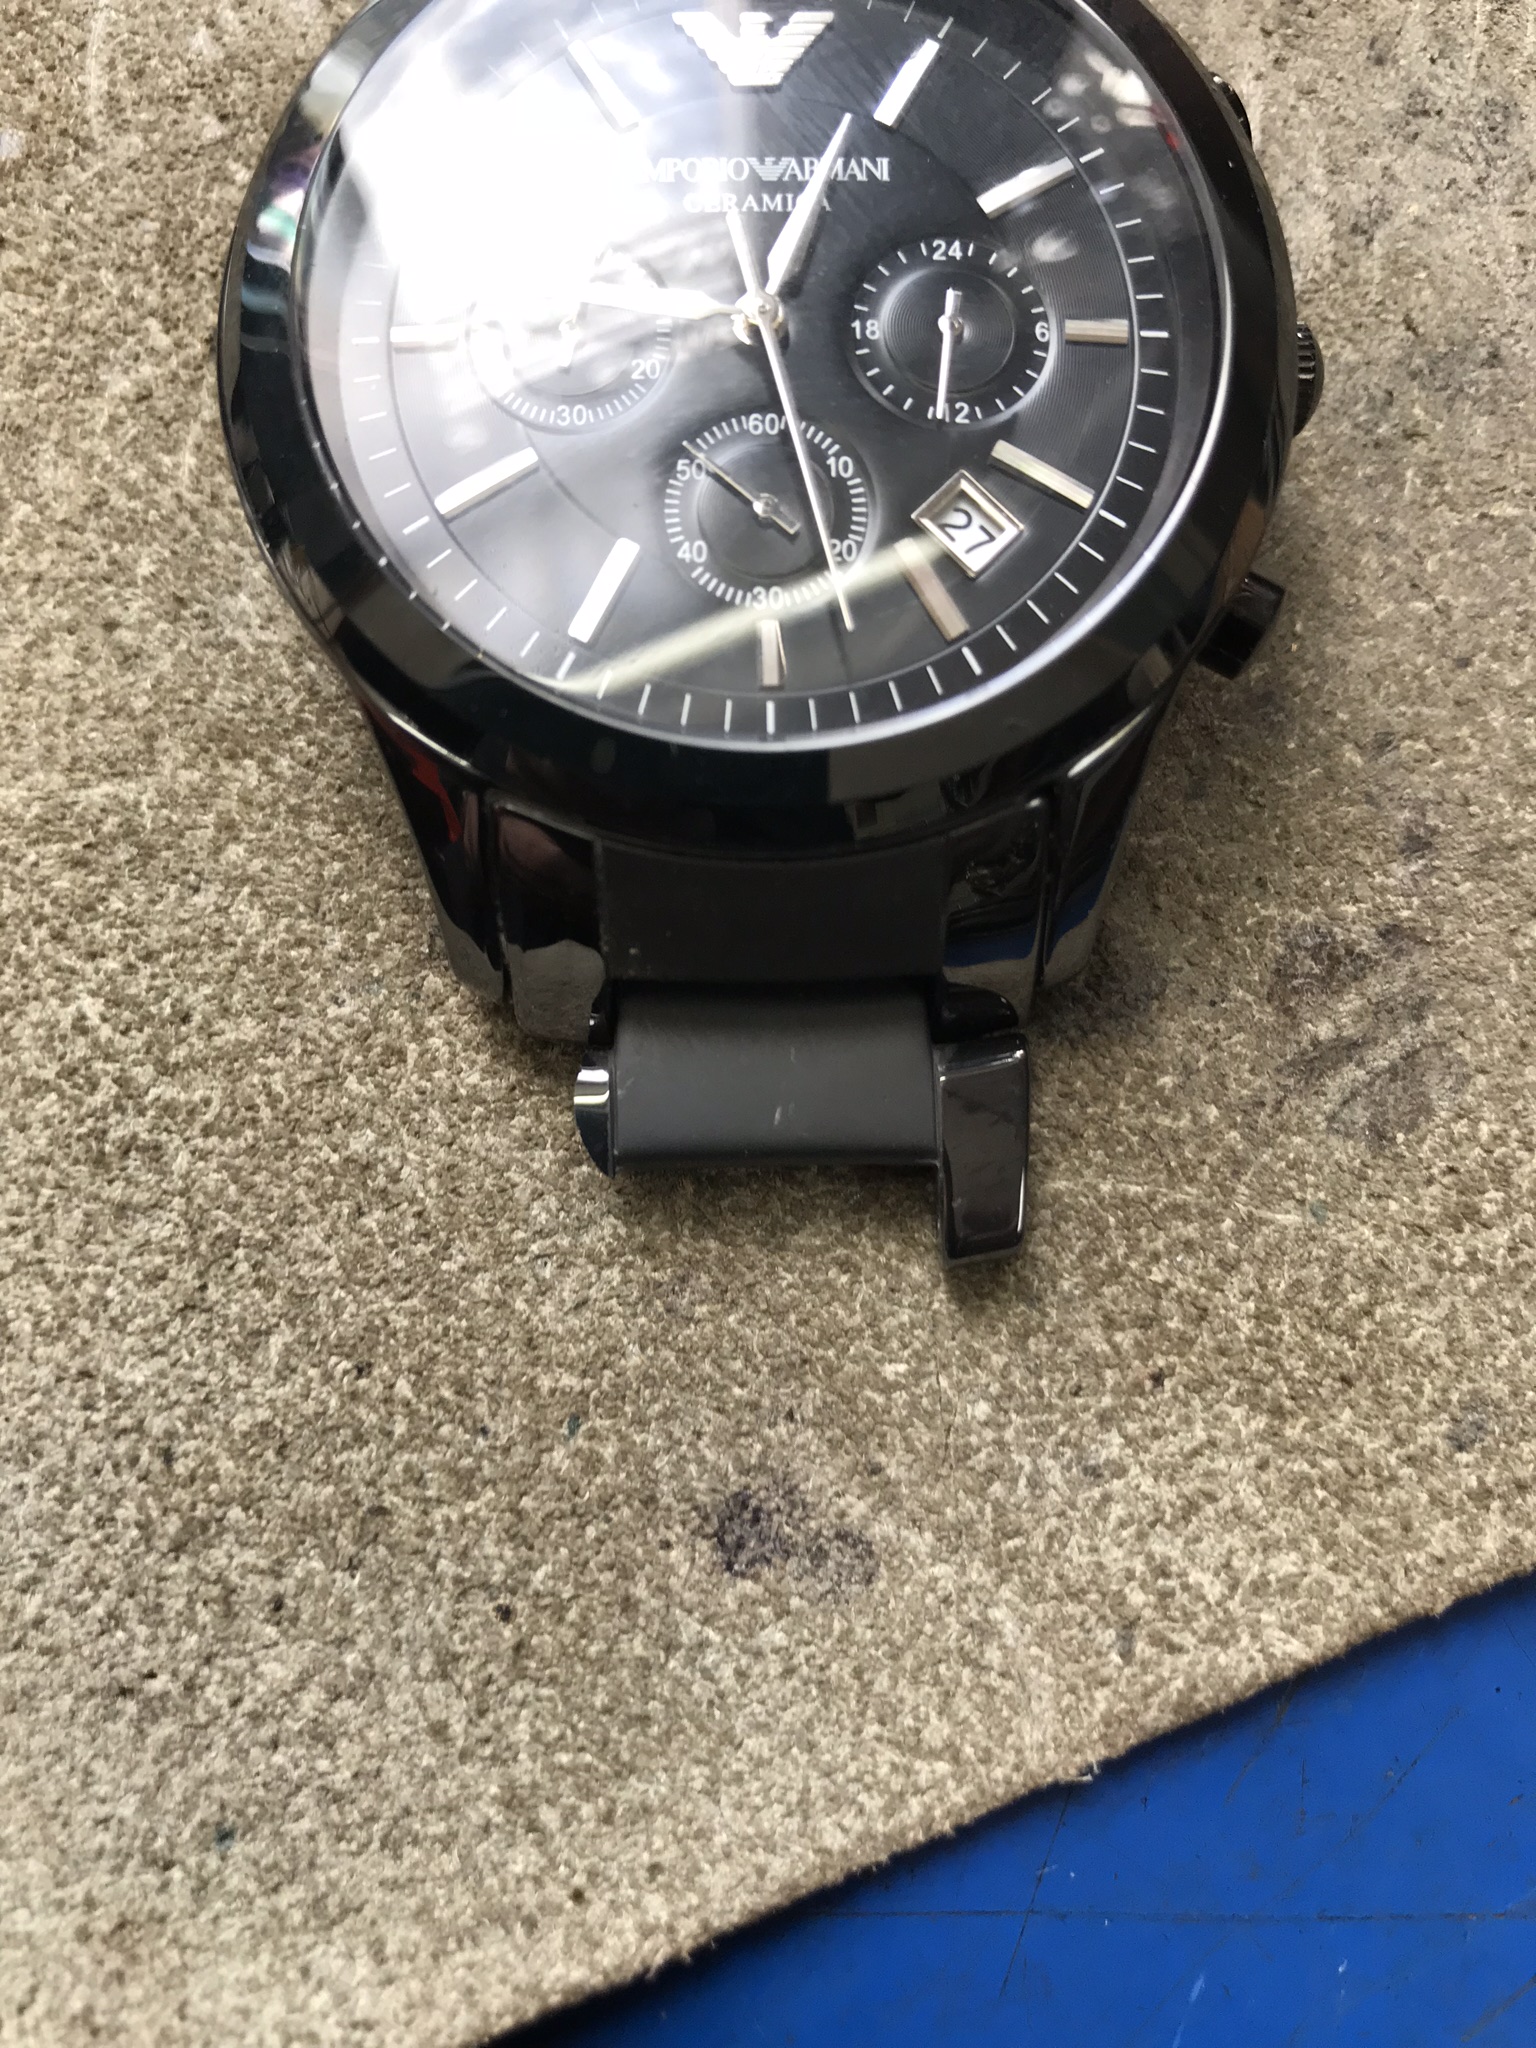 armani ceramic watch strap broken